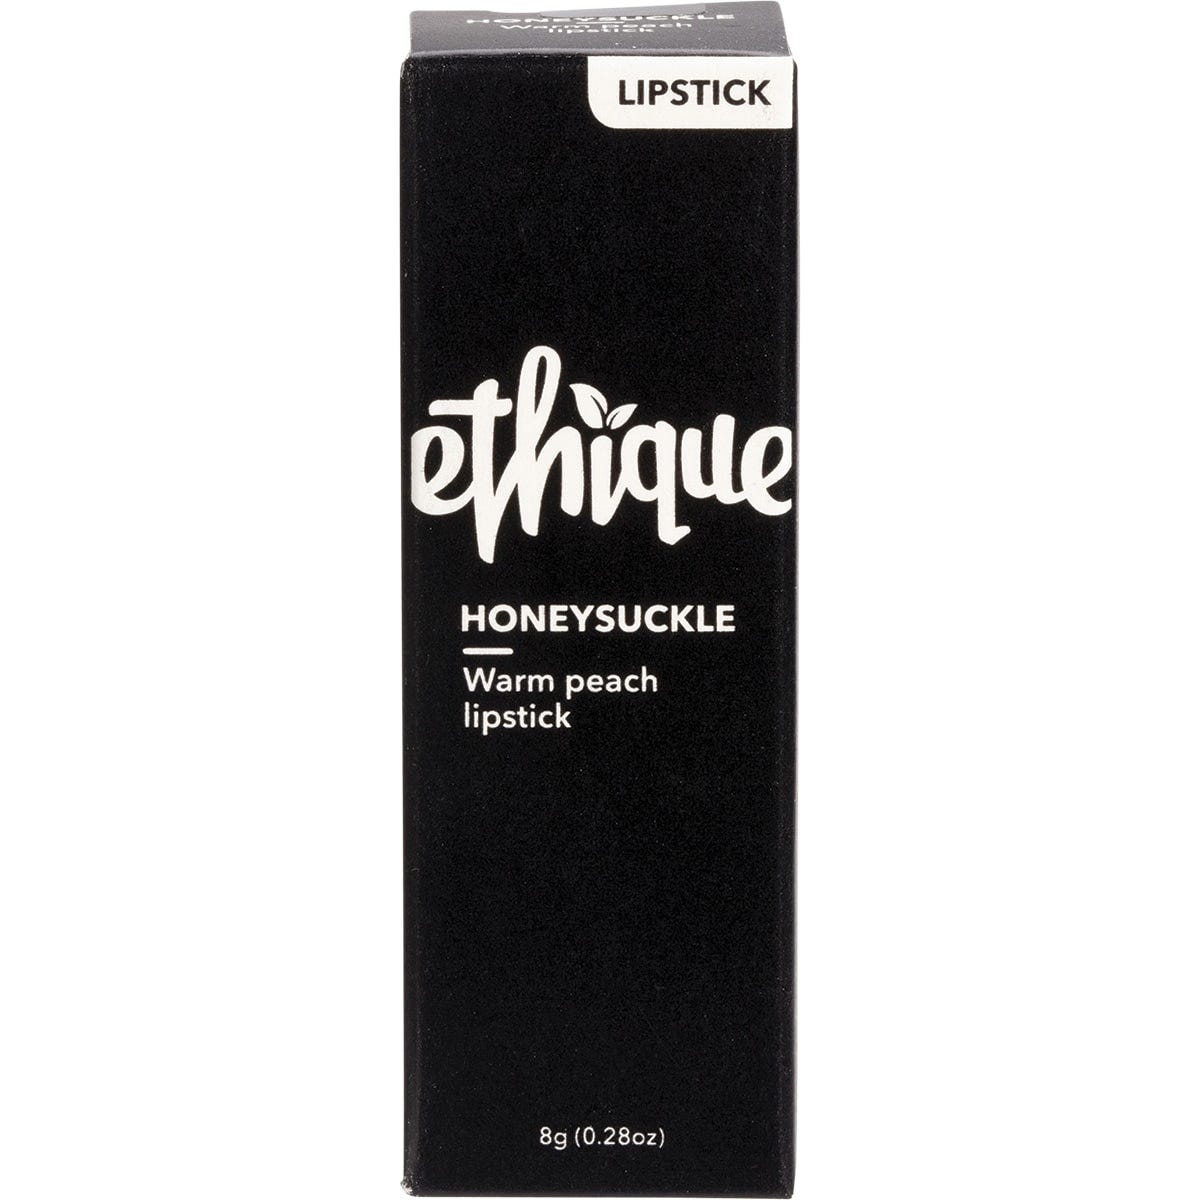 Ethique Lipstick Honeysuckle Warm Peach